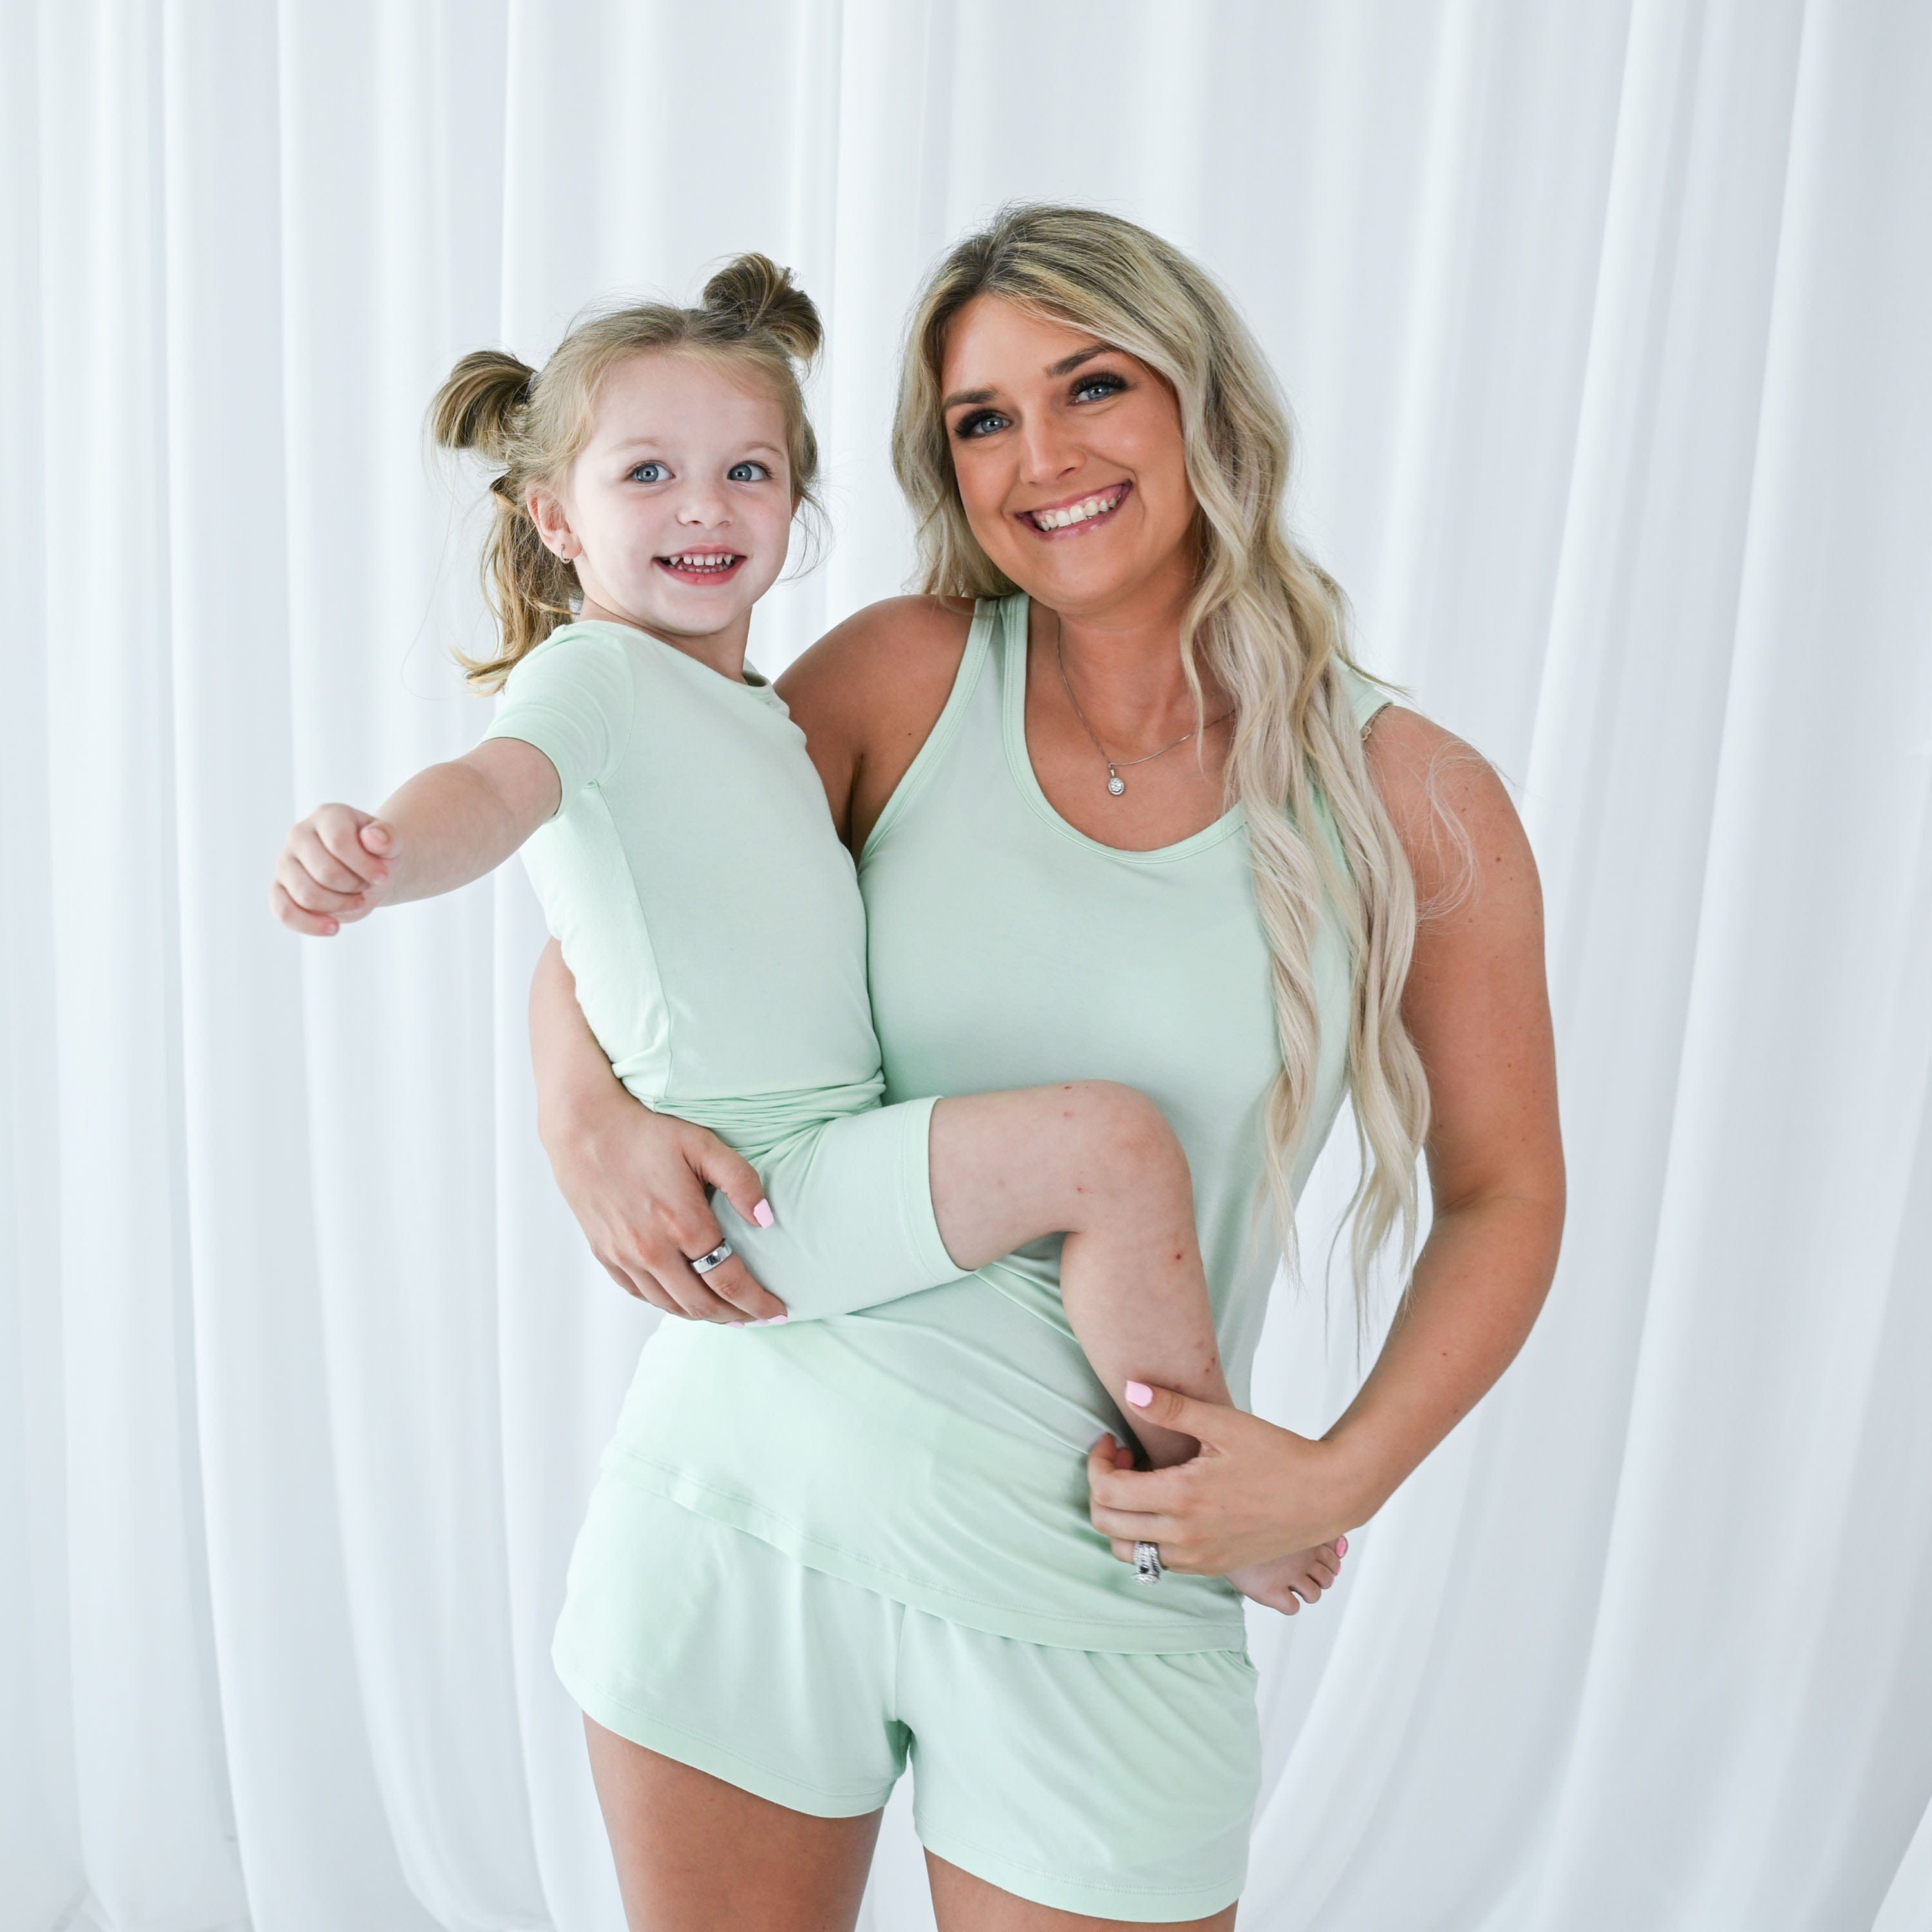 Kyte Baby Short Sleeve Toddler Pajama Set Short Sleeve Pajamas in Mint